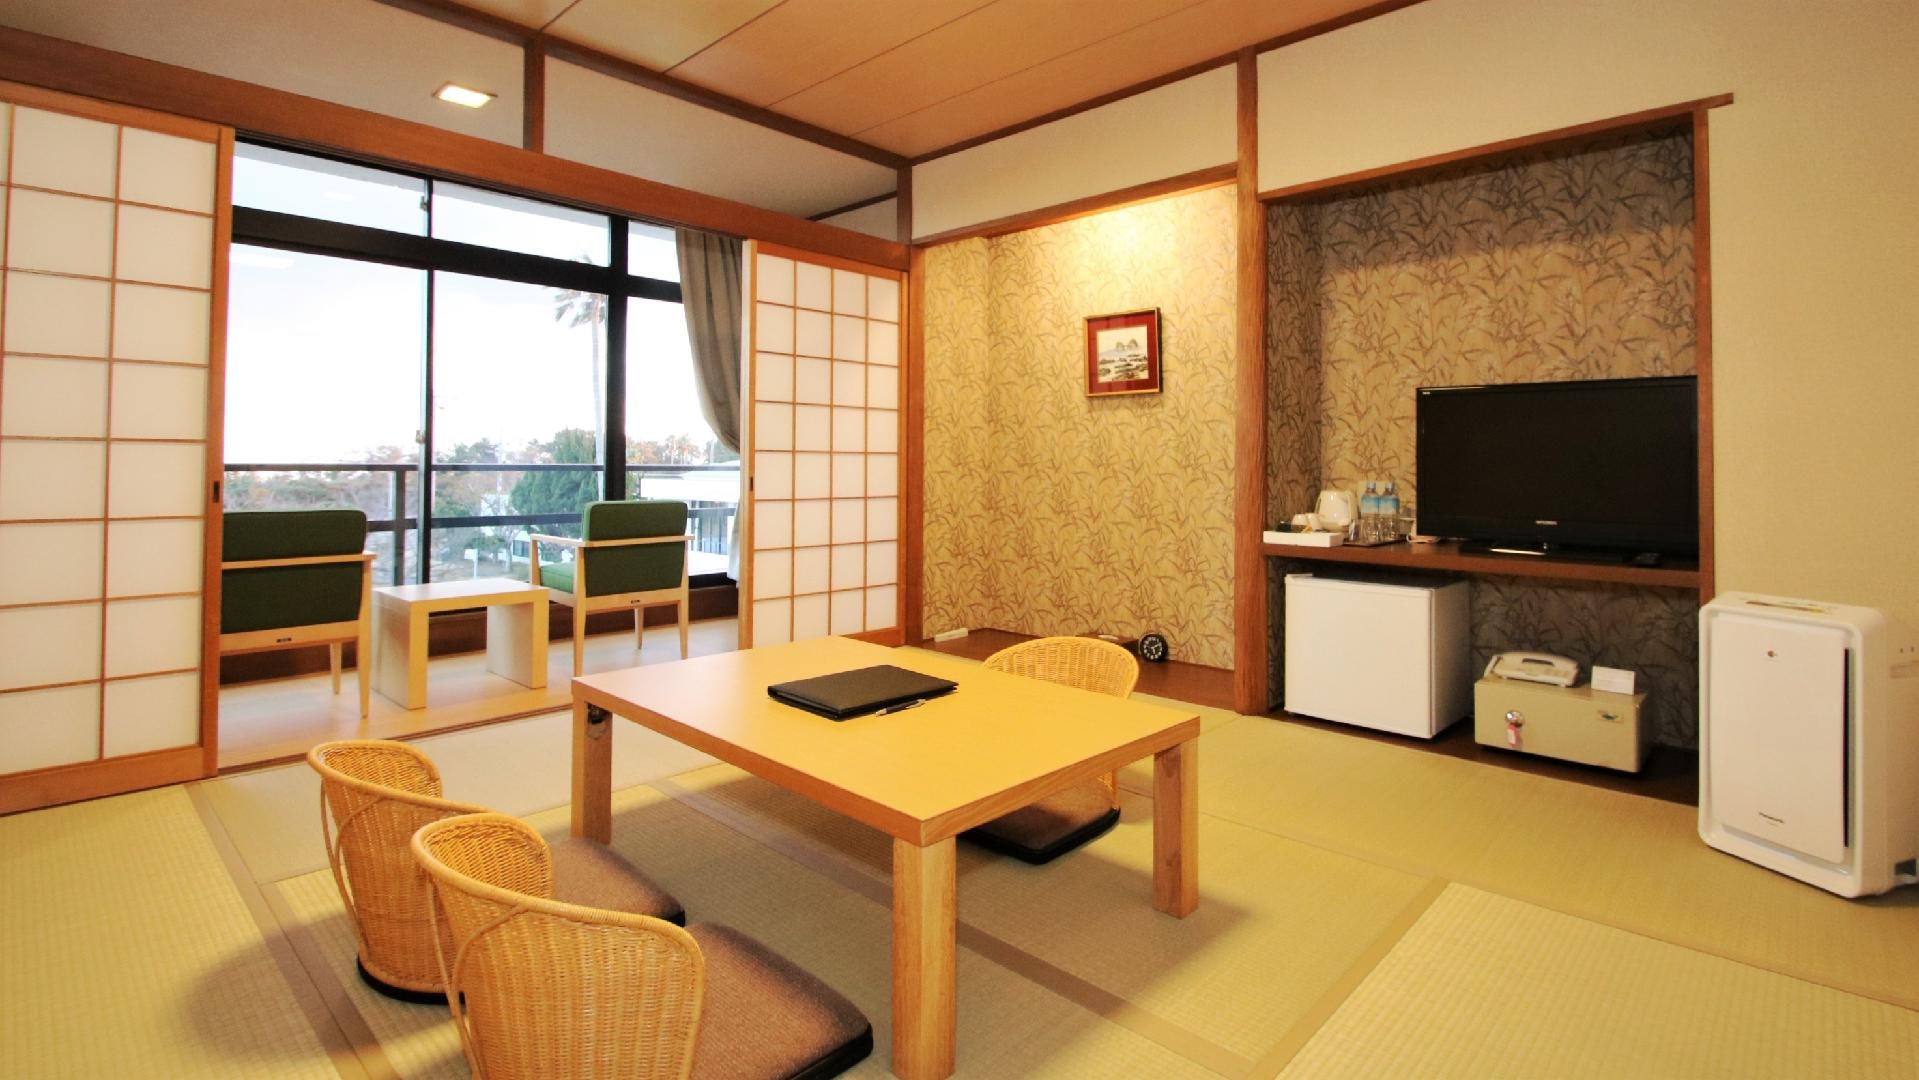 Garden view / Japanese-style room interior